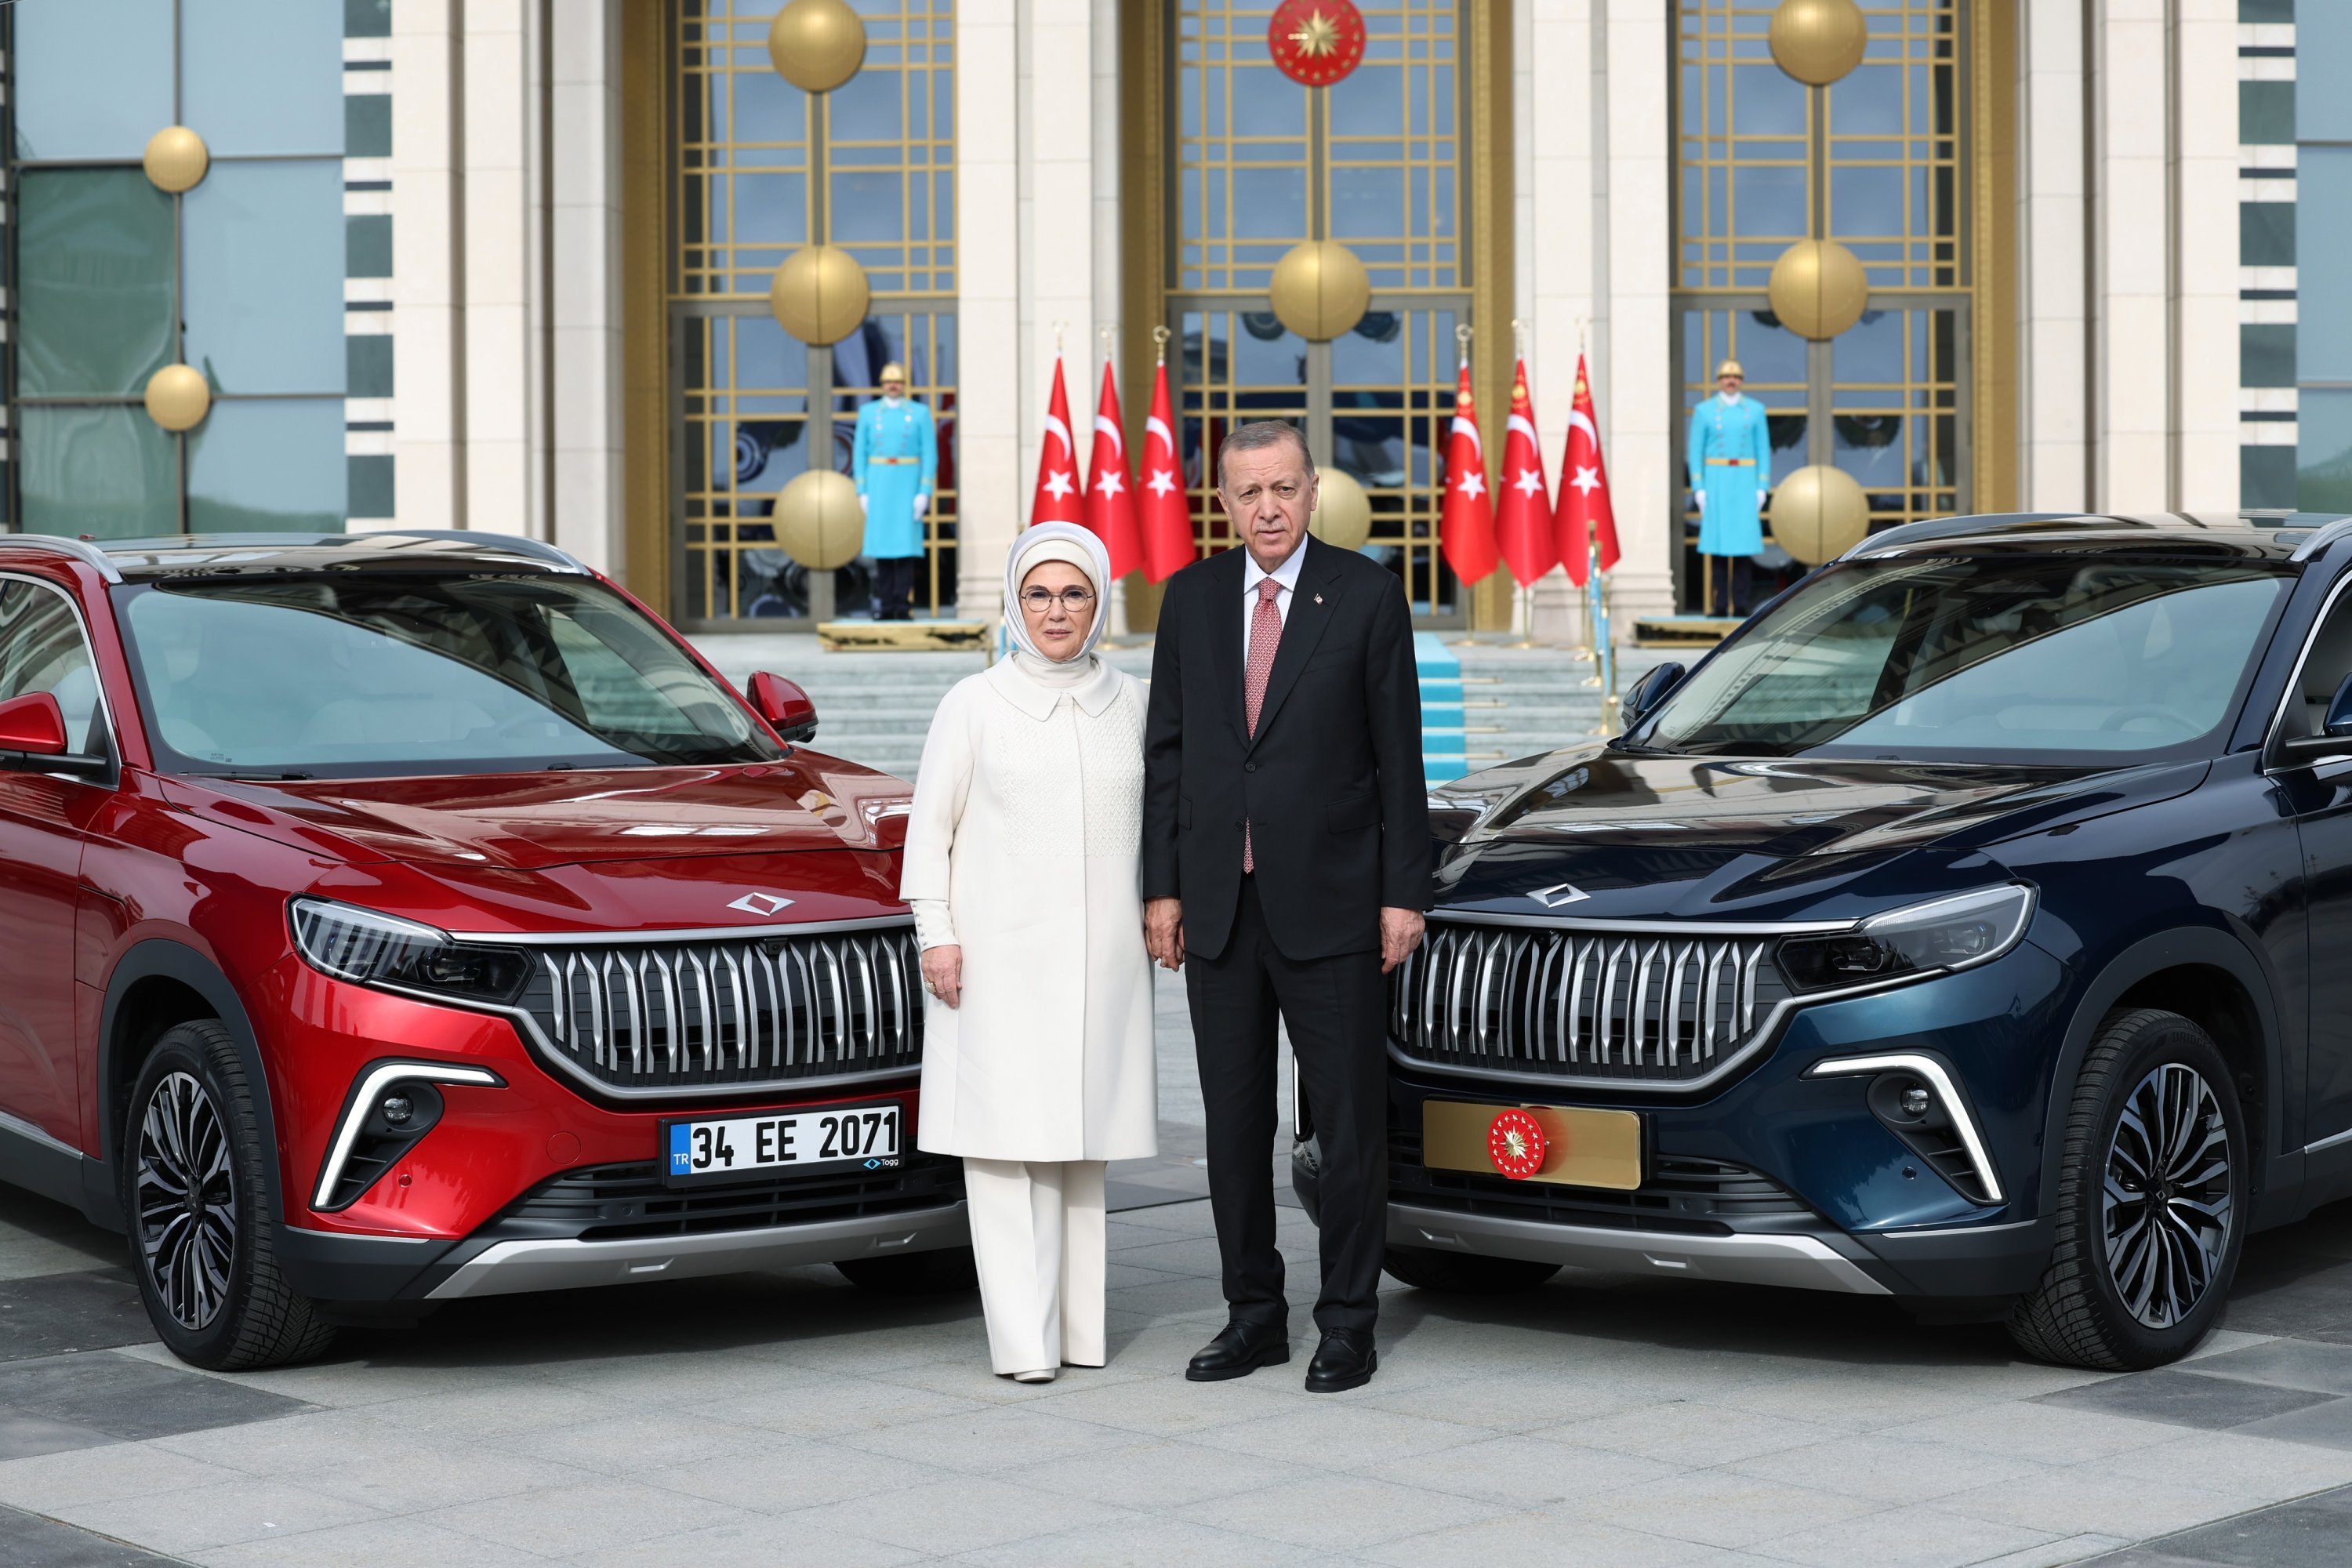 President Erdoğan officially becomes 1st owner of Türkiye's Togg car | Daily Sabah